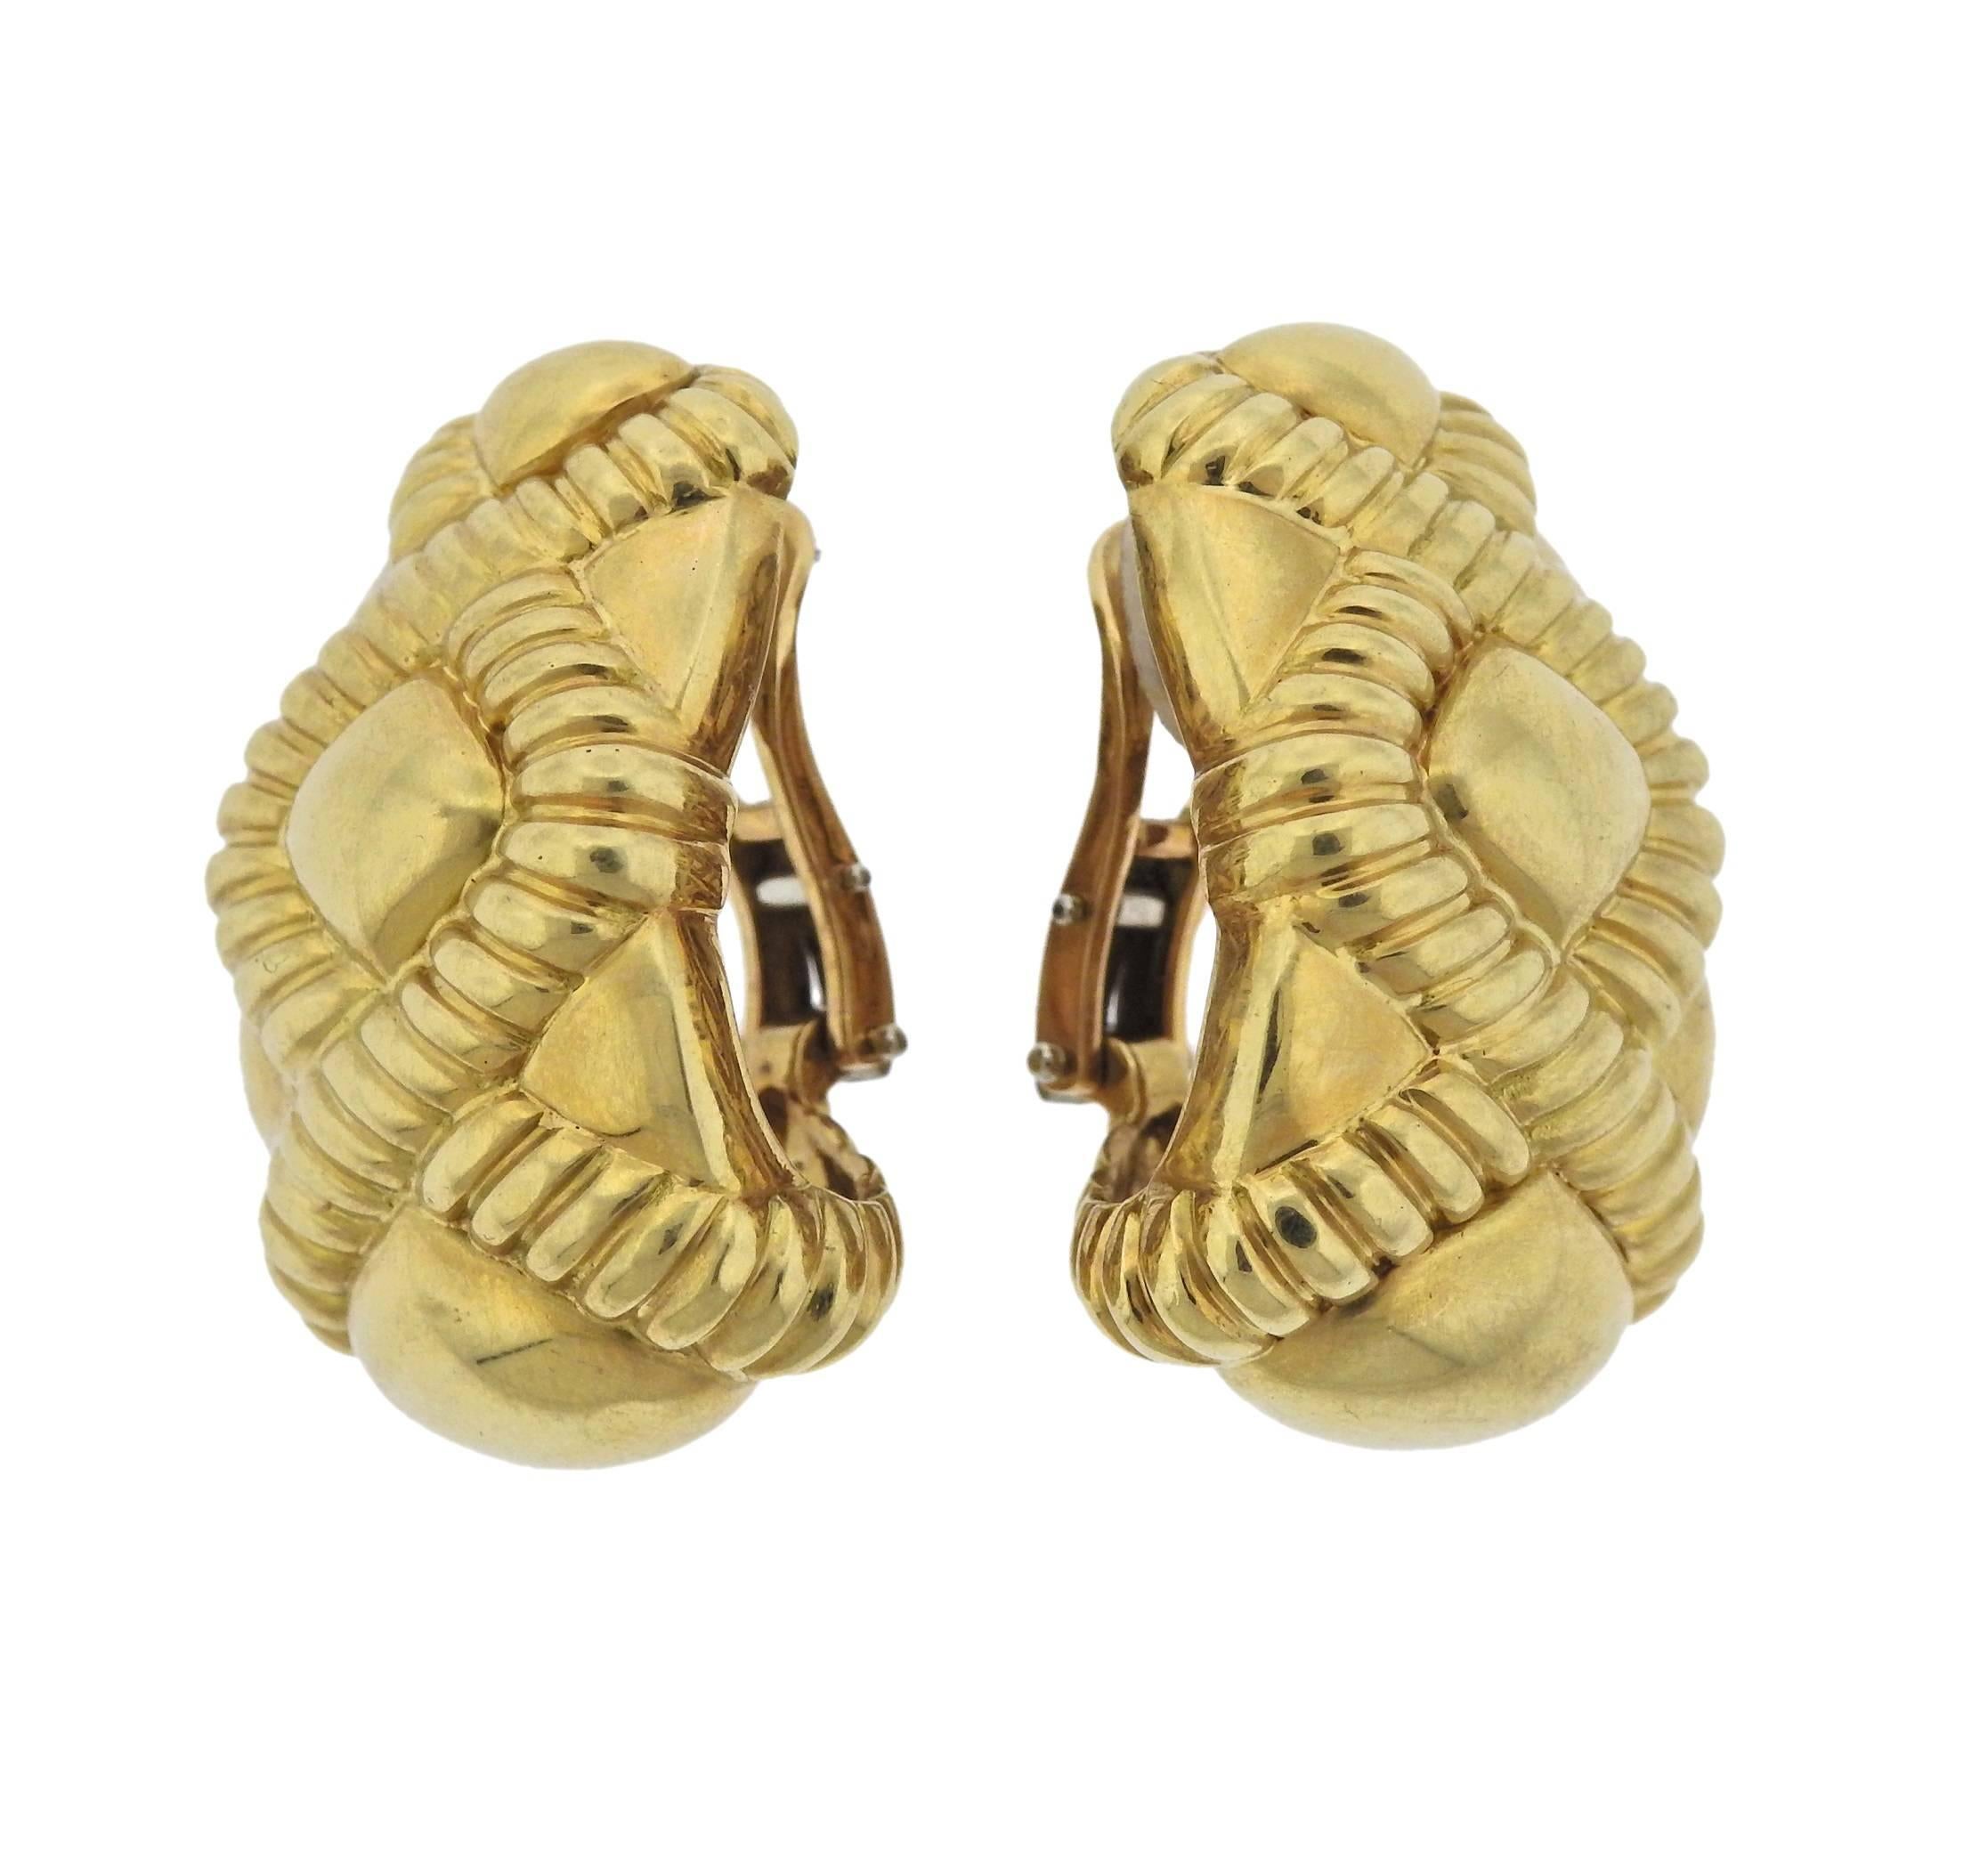  Pair of large half hoop 18k gold earrings. Earrings are 34mm x 22mm, weigh 38.9 grams. Marked 18Kt.